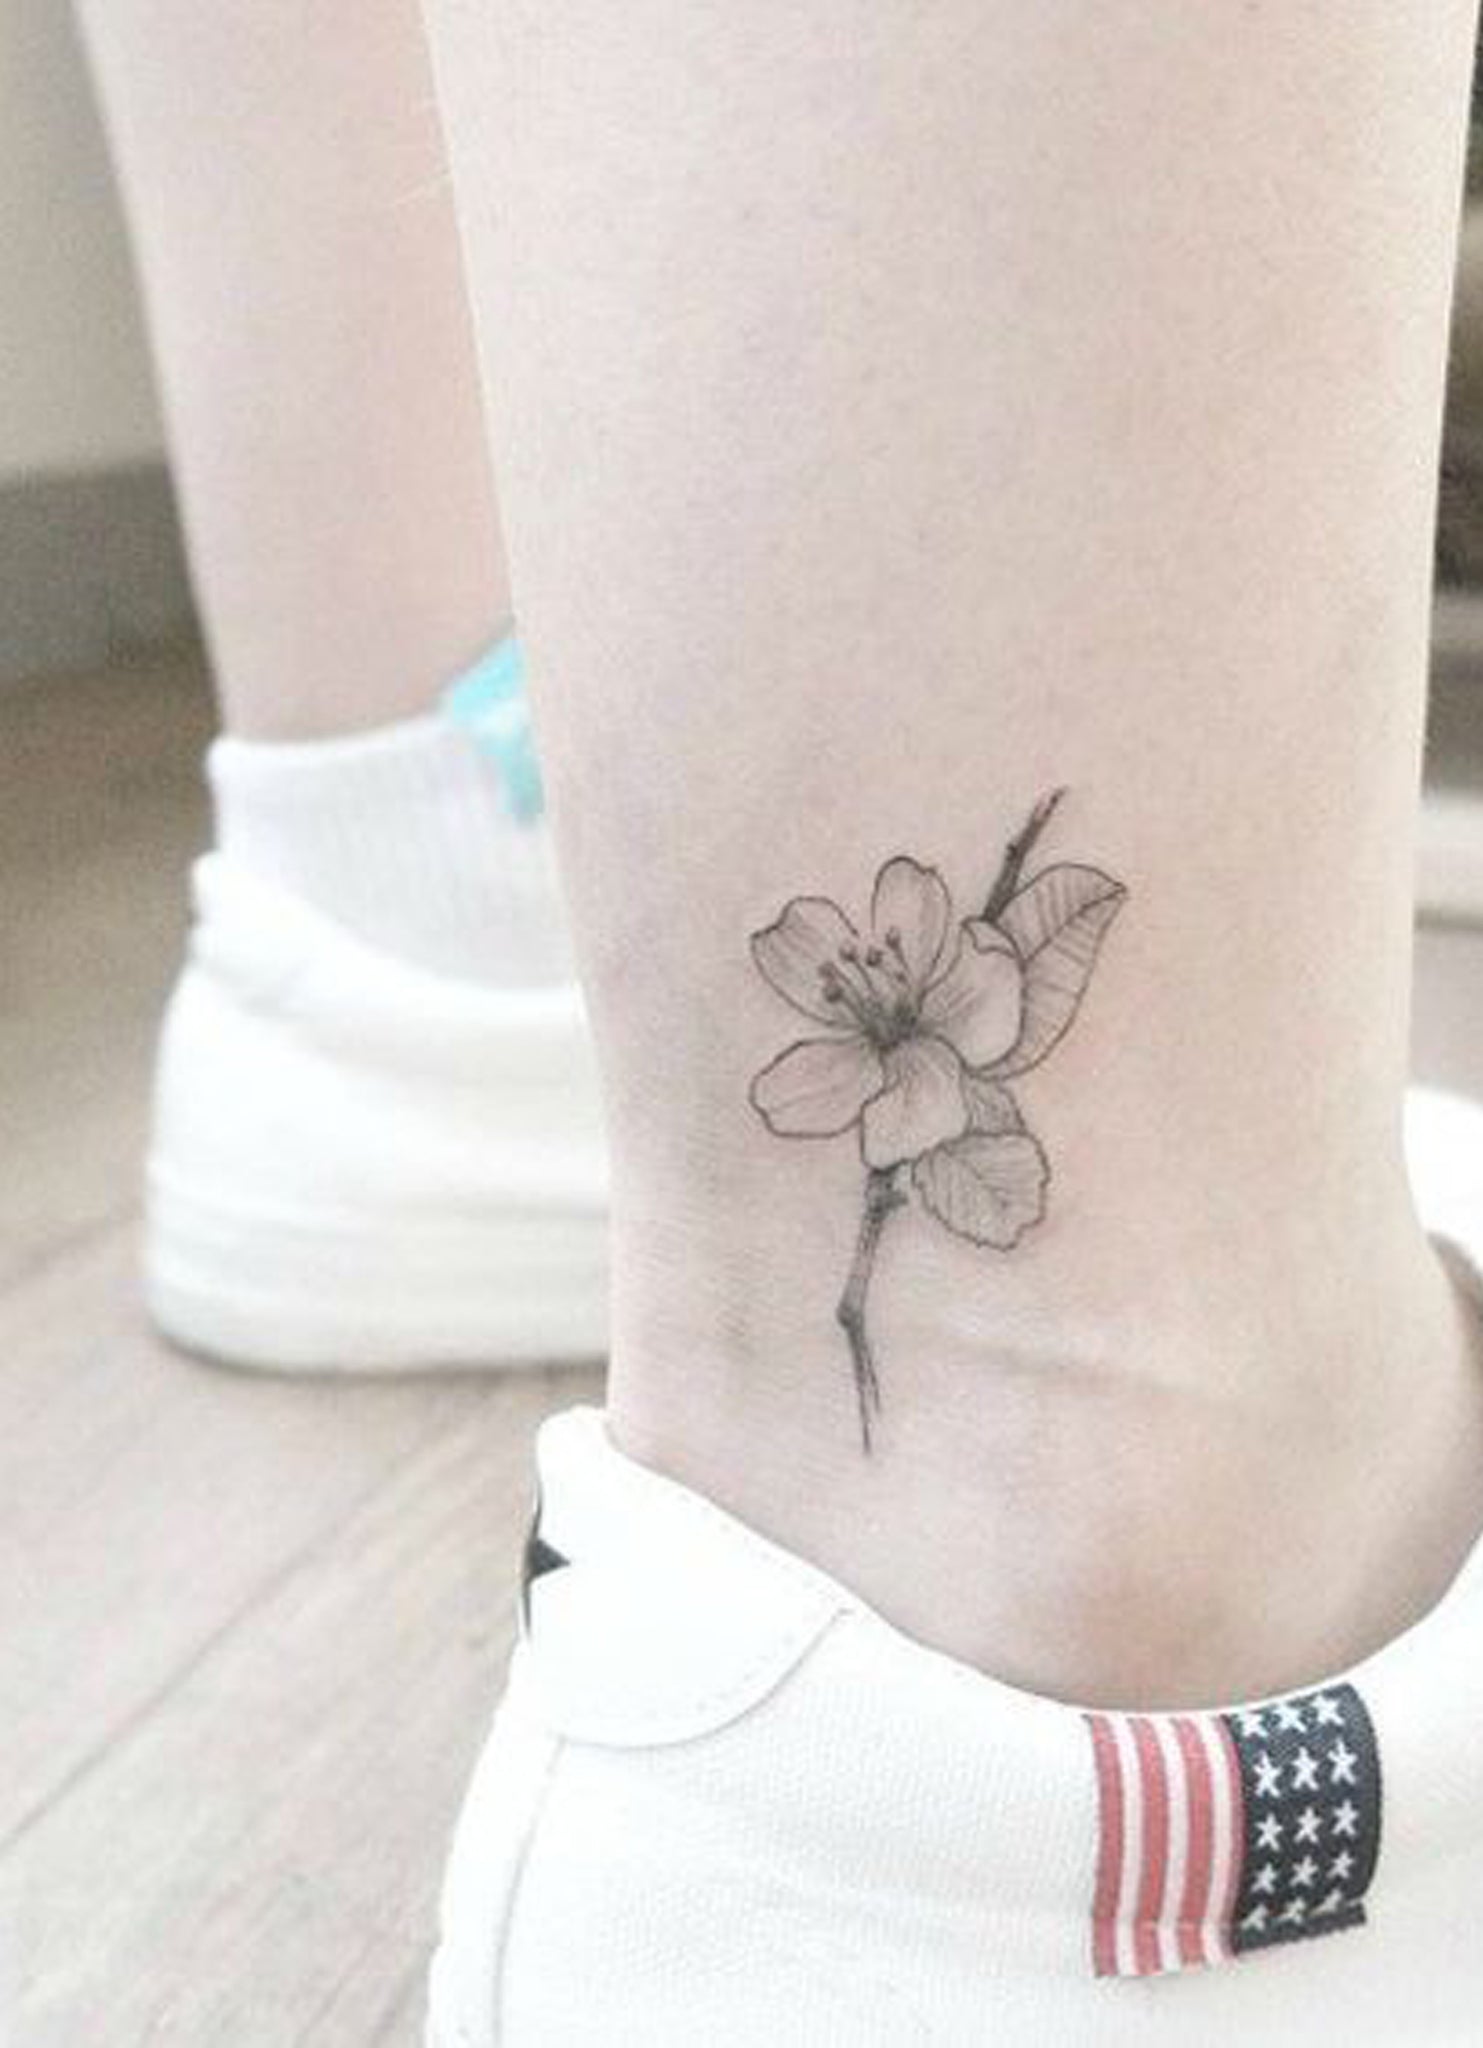 Delicate Black Cherry Blossom Ankle Tattoo Ideas for Women - Small Flower Leg Tat - www.MyBodiArt.com #tattoos